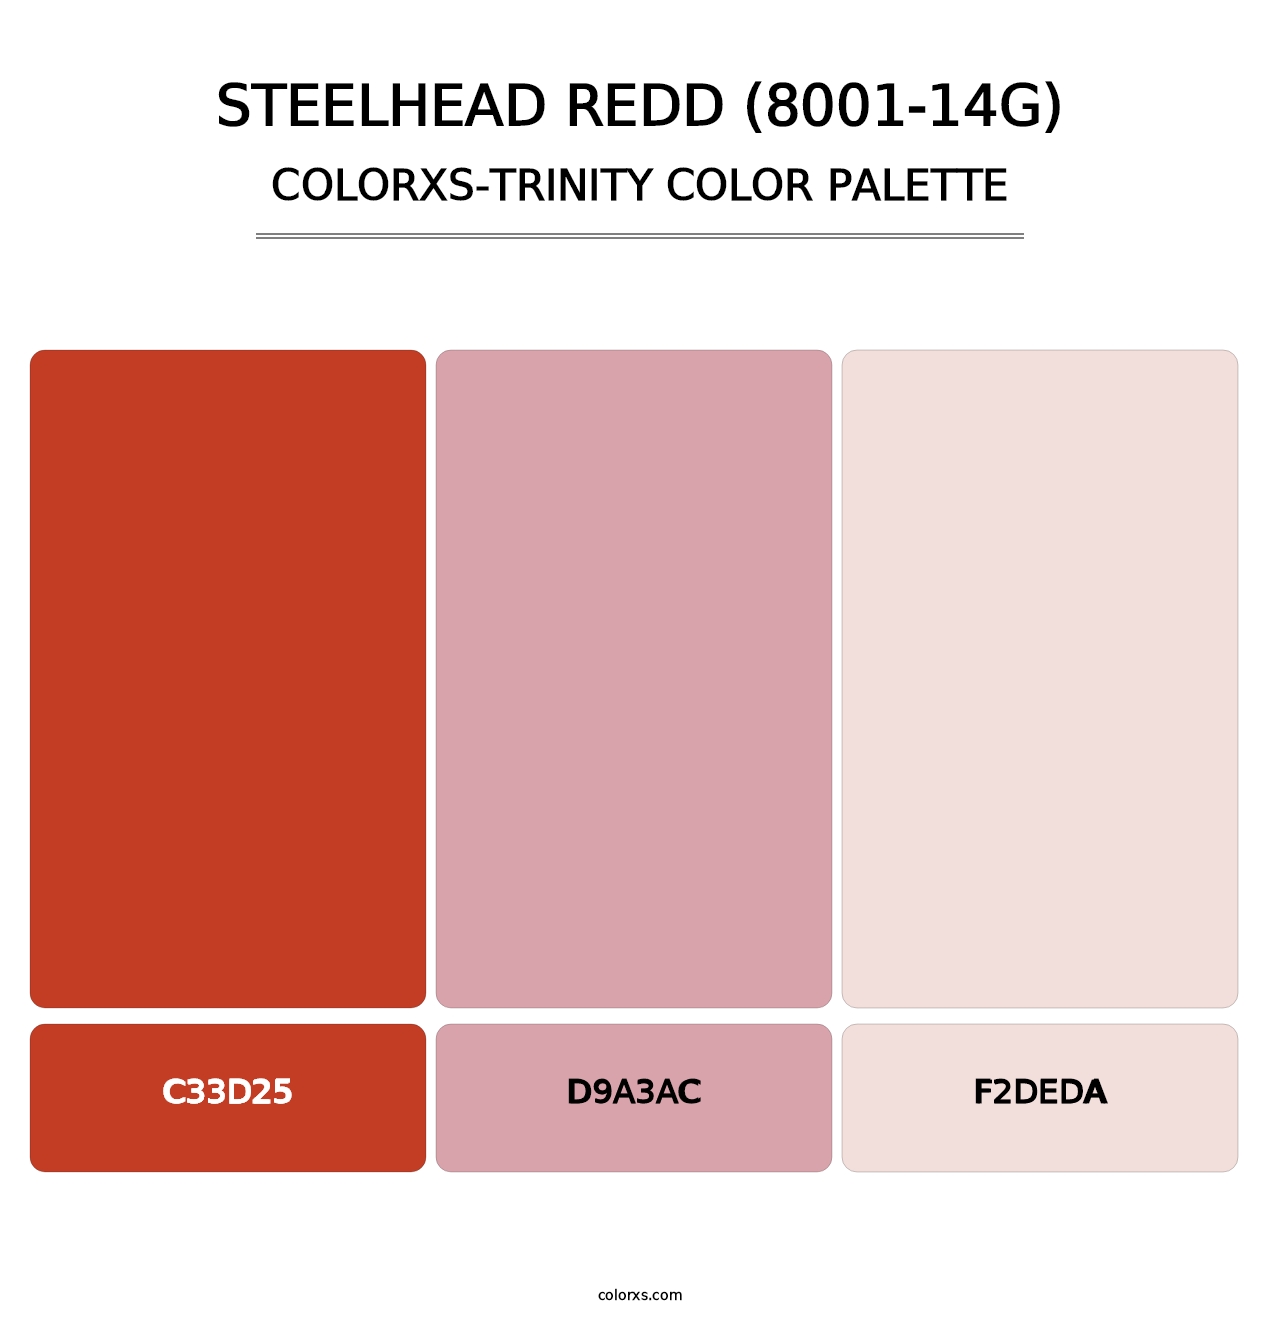 Steelhead Redd (8001-14G) - Colorxs Trinity Palette